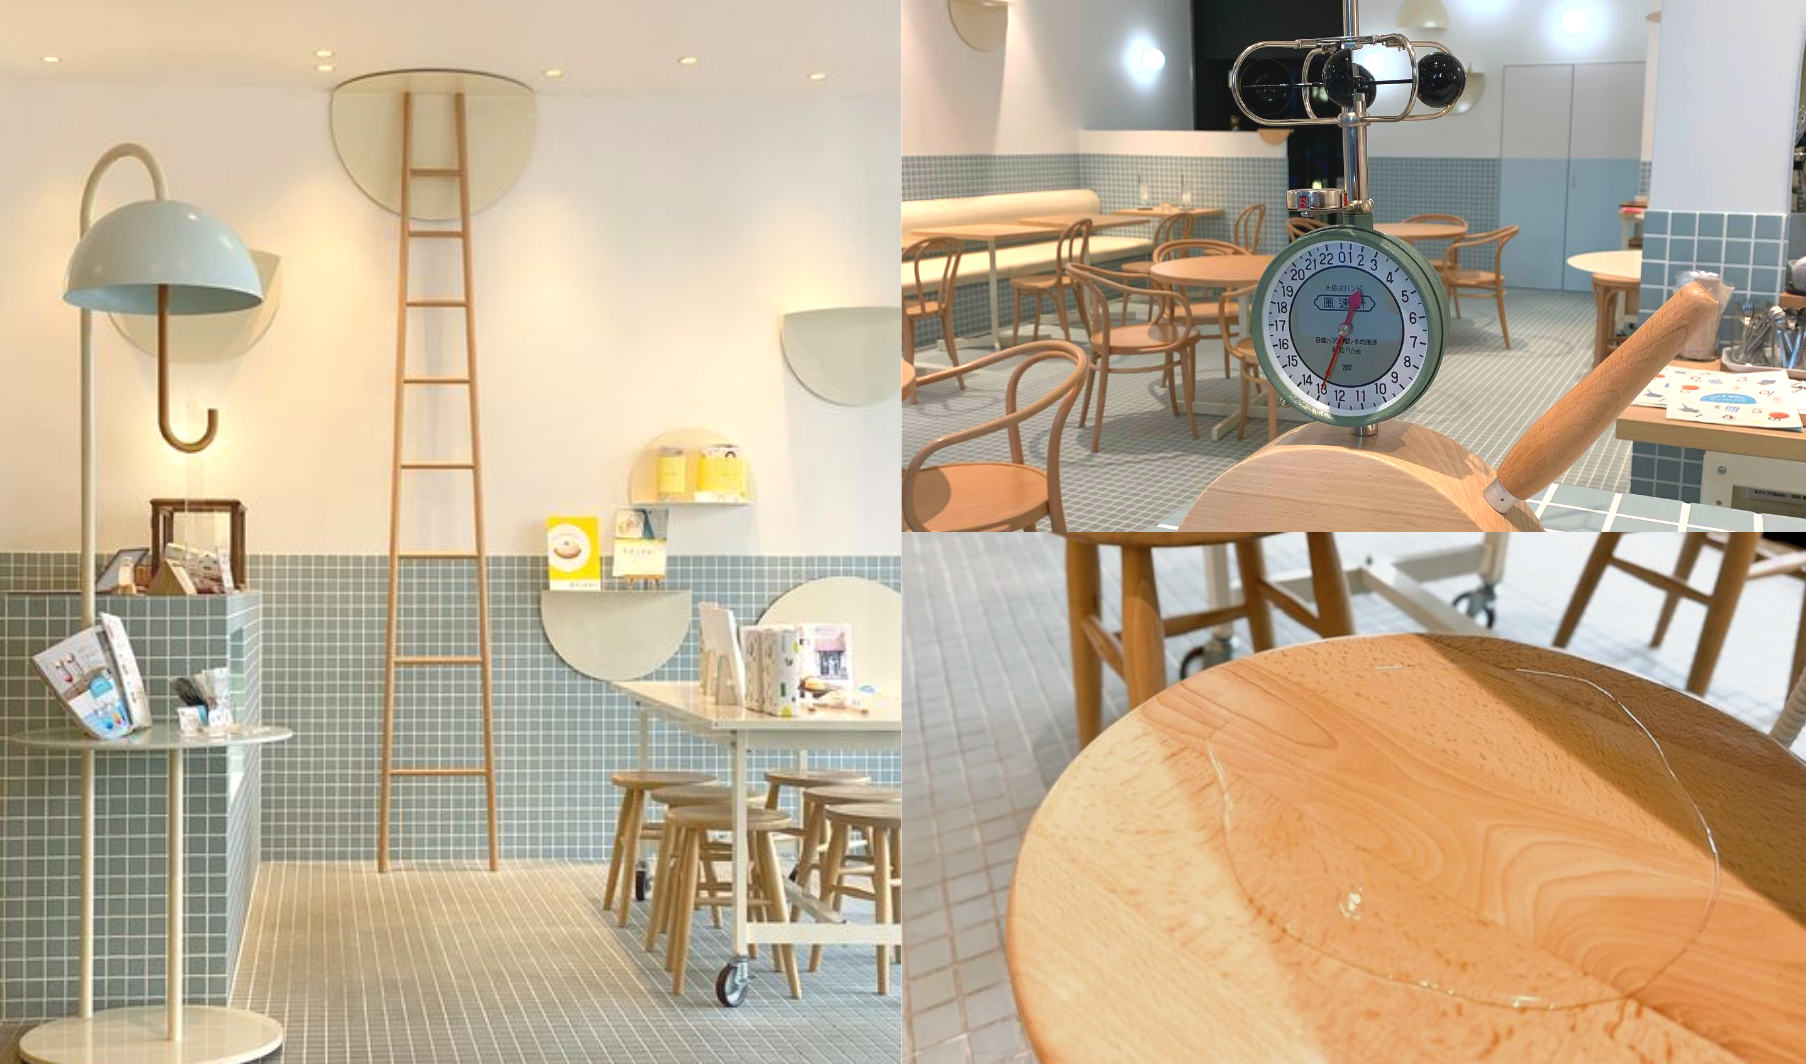 Otenki Parlour - collage of cafe interior and decor